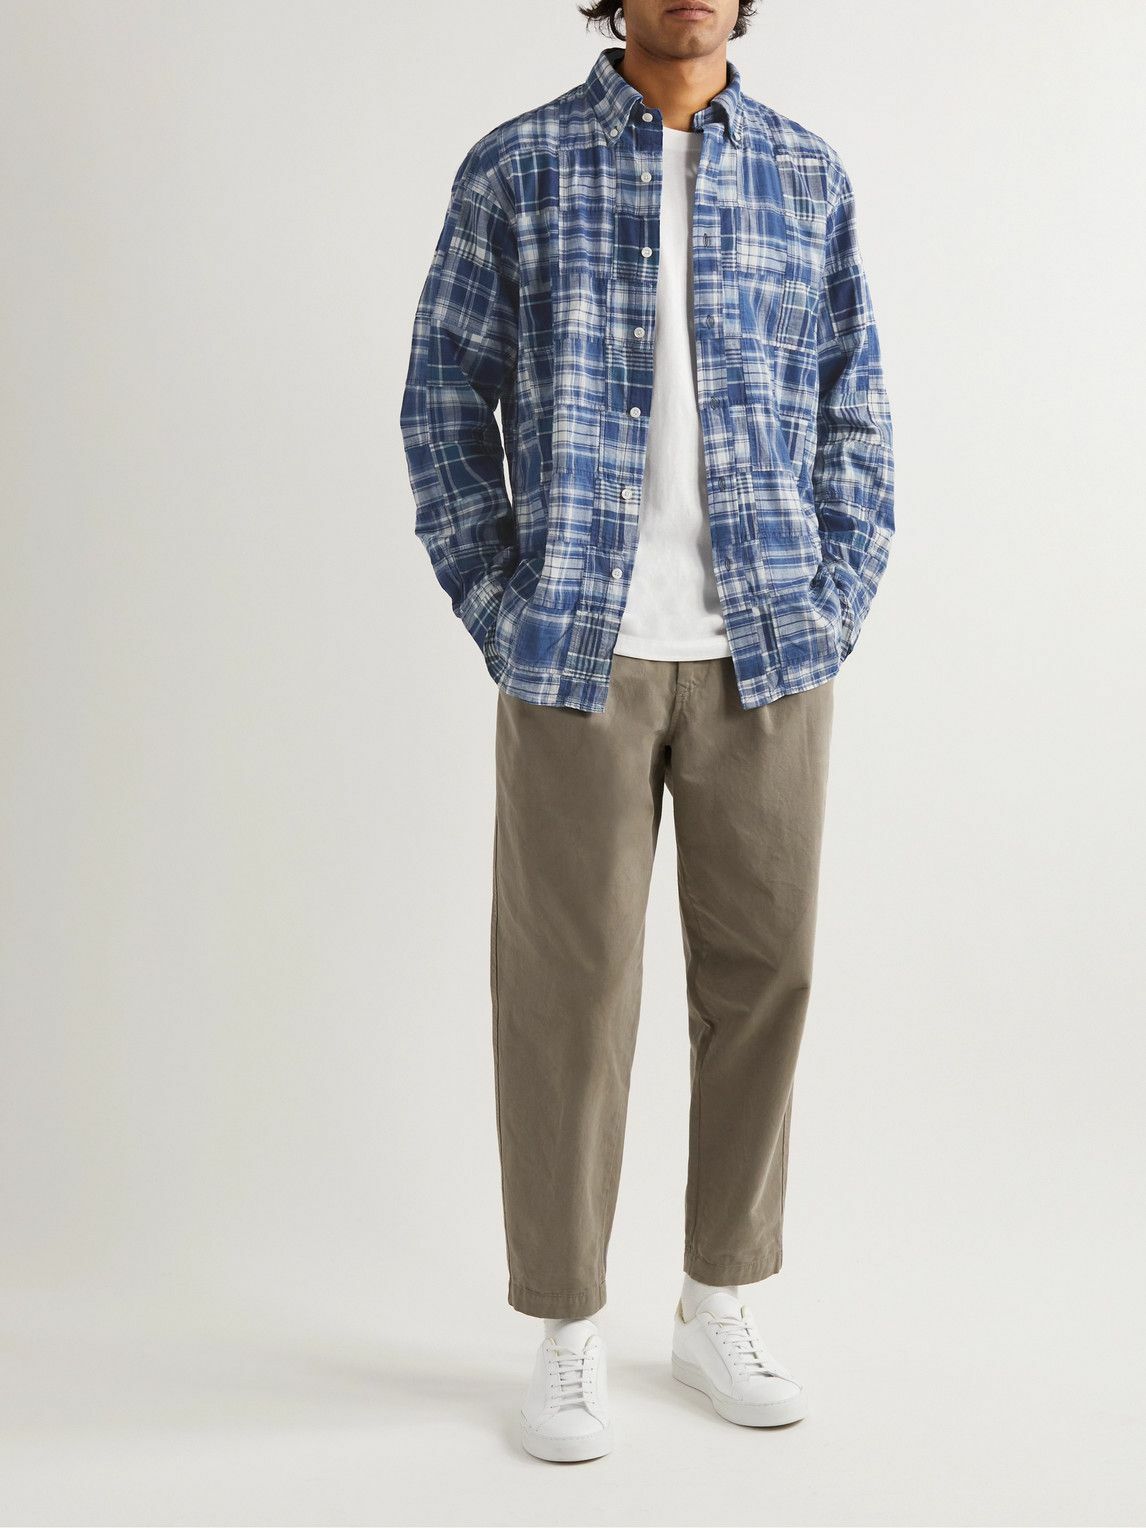 Polo Ralph Lauren - Button-Down Collar Patchwork Checked Cotton Shirt - Blue